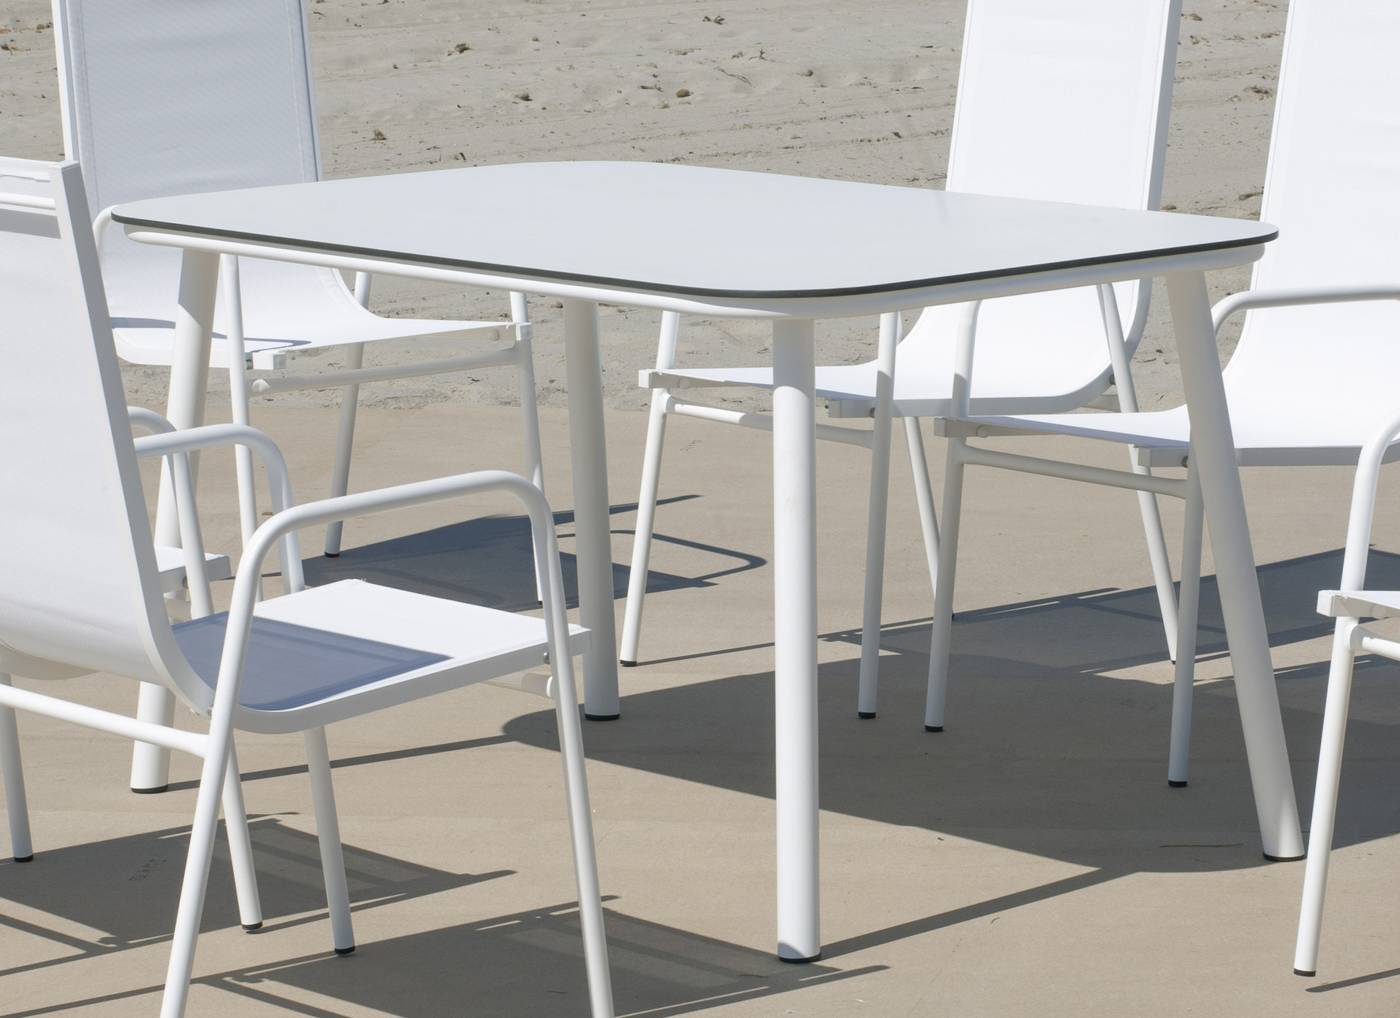 Set Mundra-150-4 Avalon - Conjunto aluminio para jardín: Mesa rectangular con tablero HPL de 150 cm + 4 sillones de textilen. Colores: blanco y antracita.